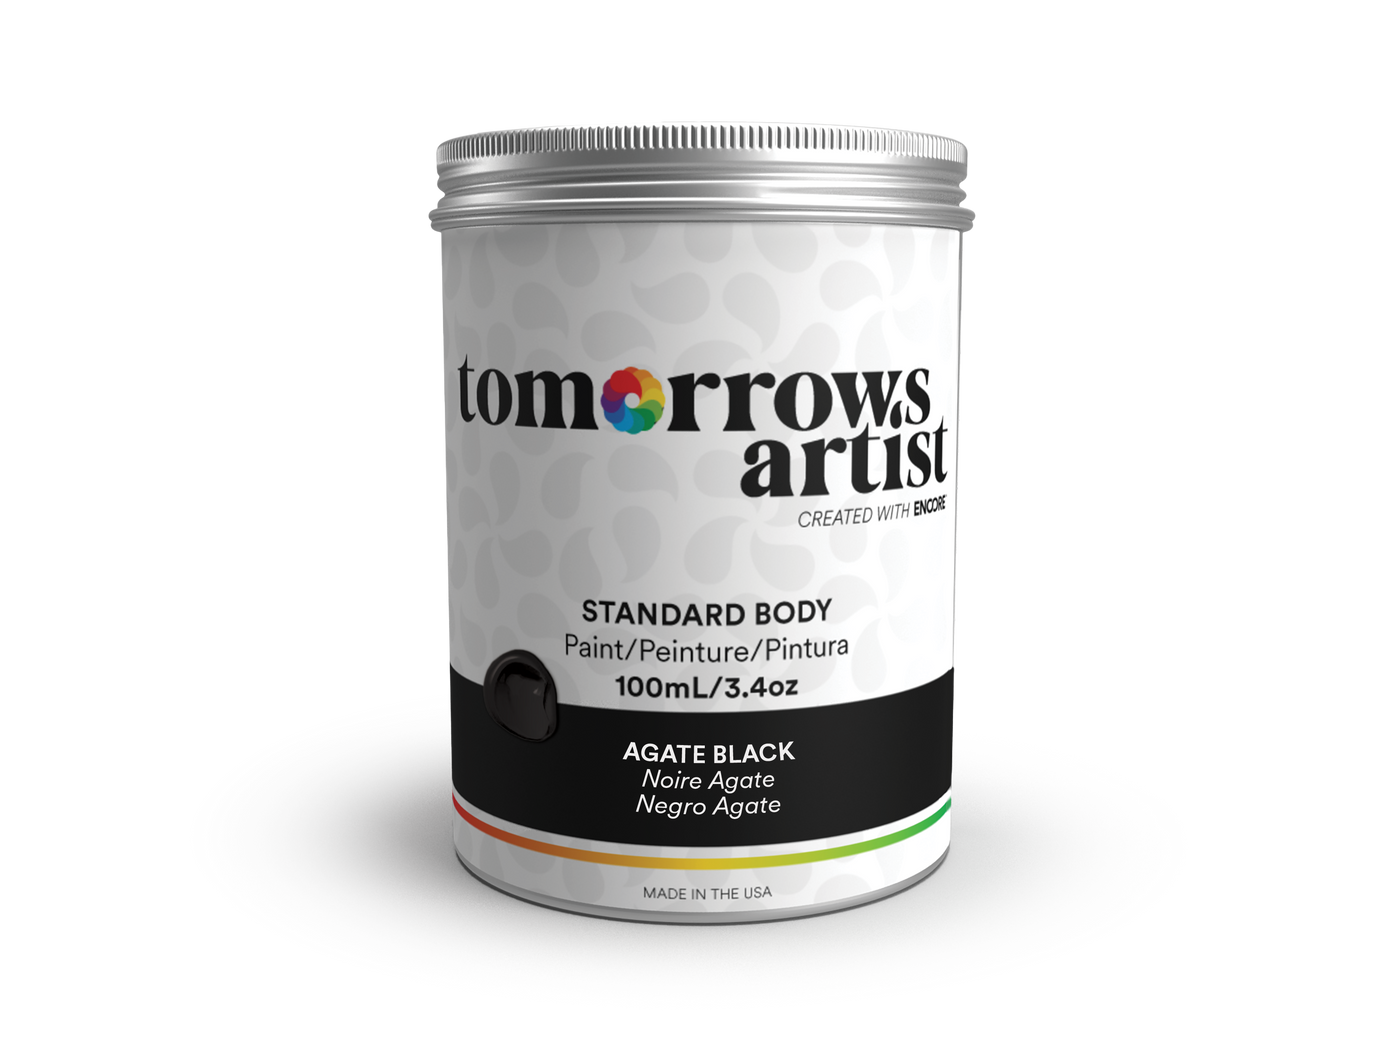 Tomorrows Artist: Standard Body Eco-Friendly Acrylic Art Paint 100ml/3.38oz Jar